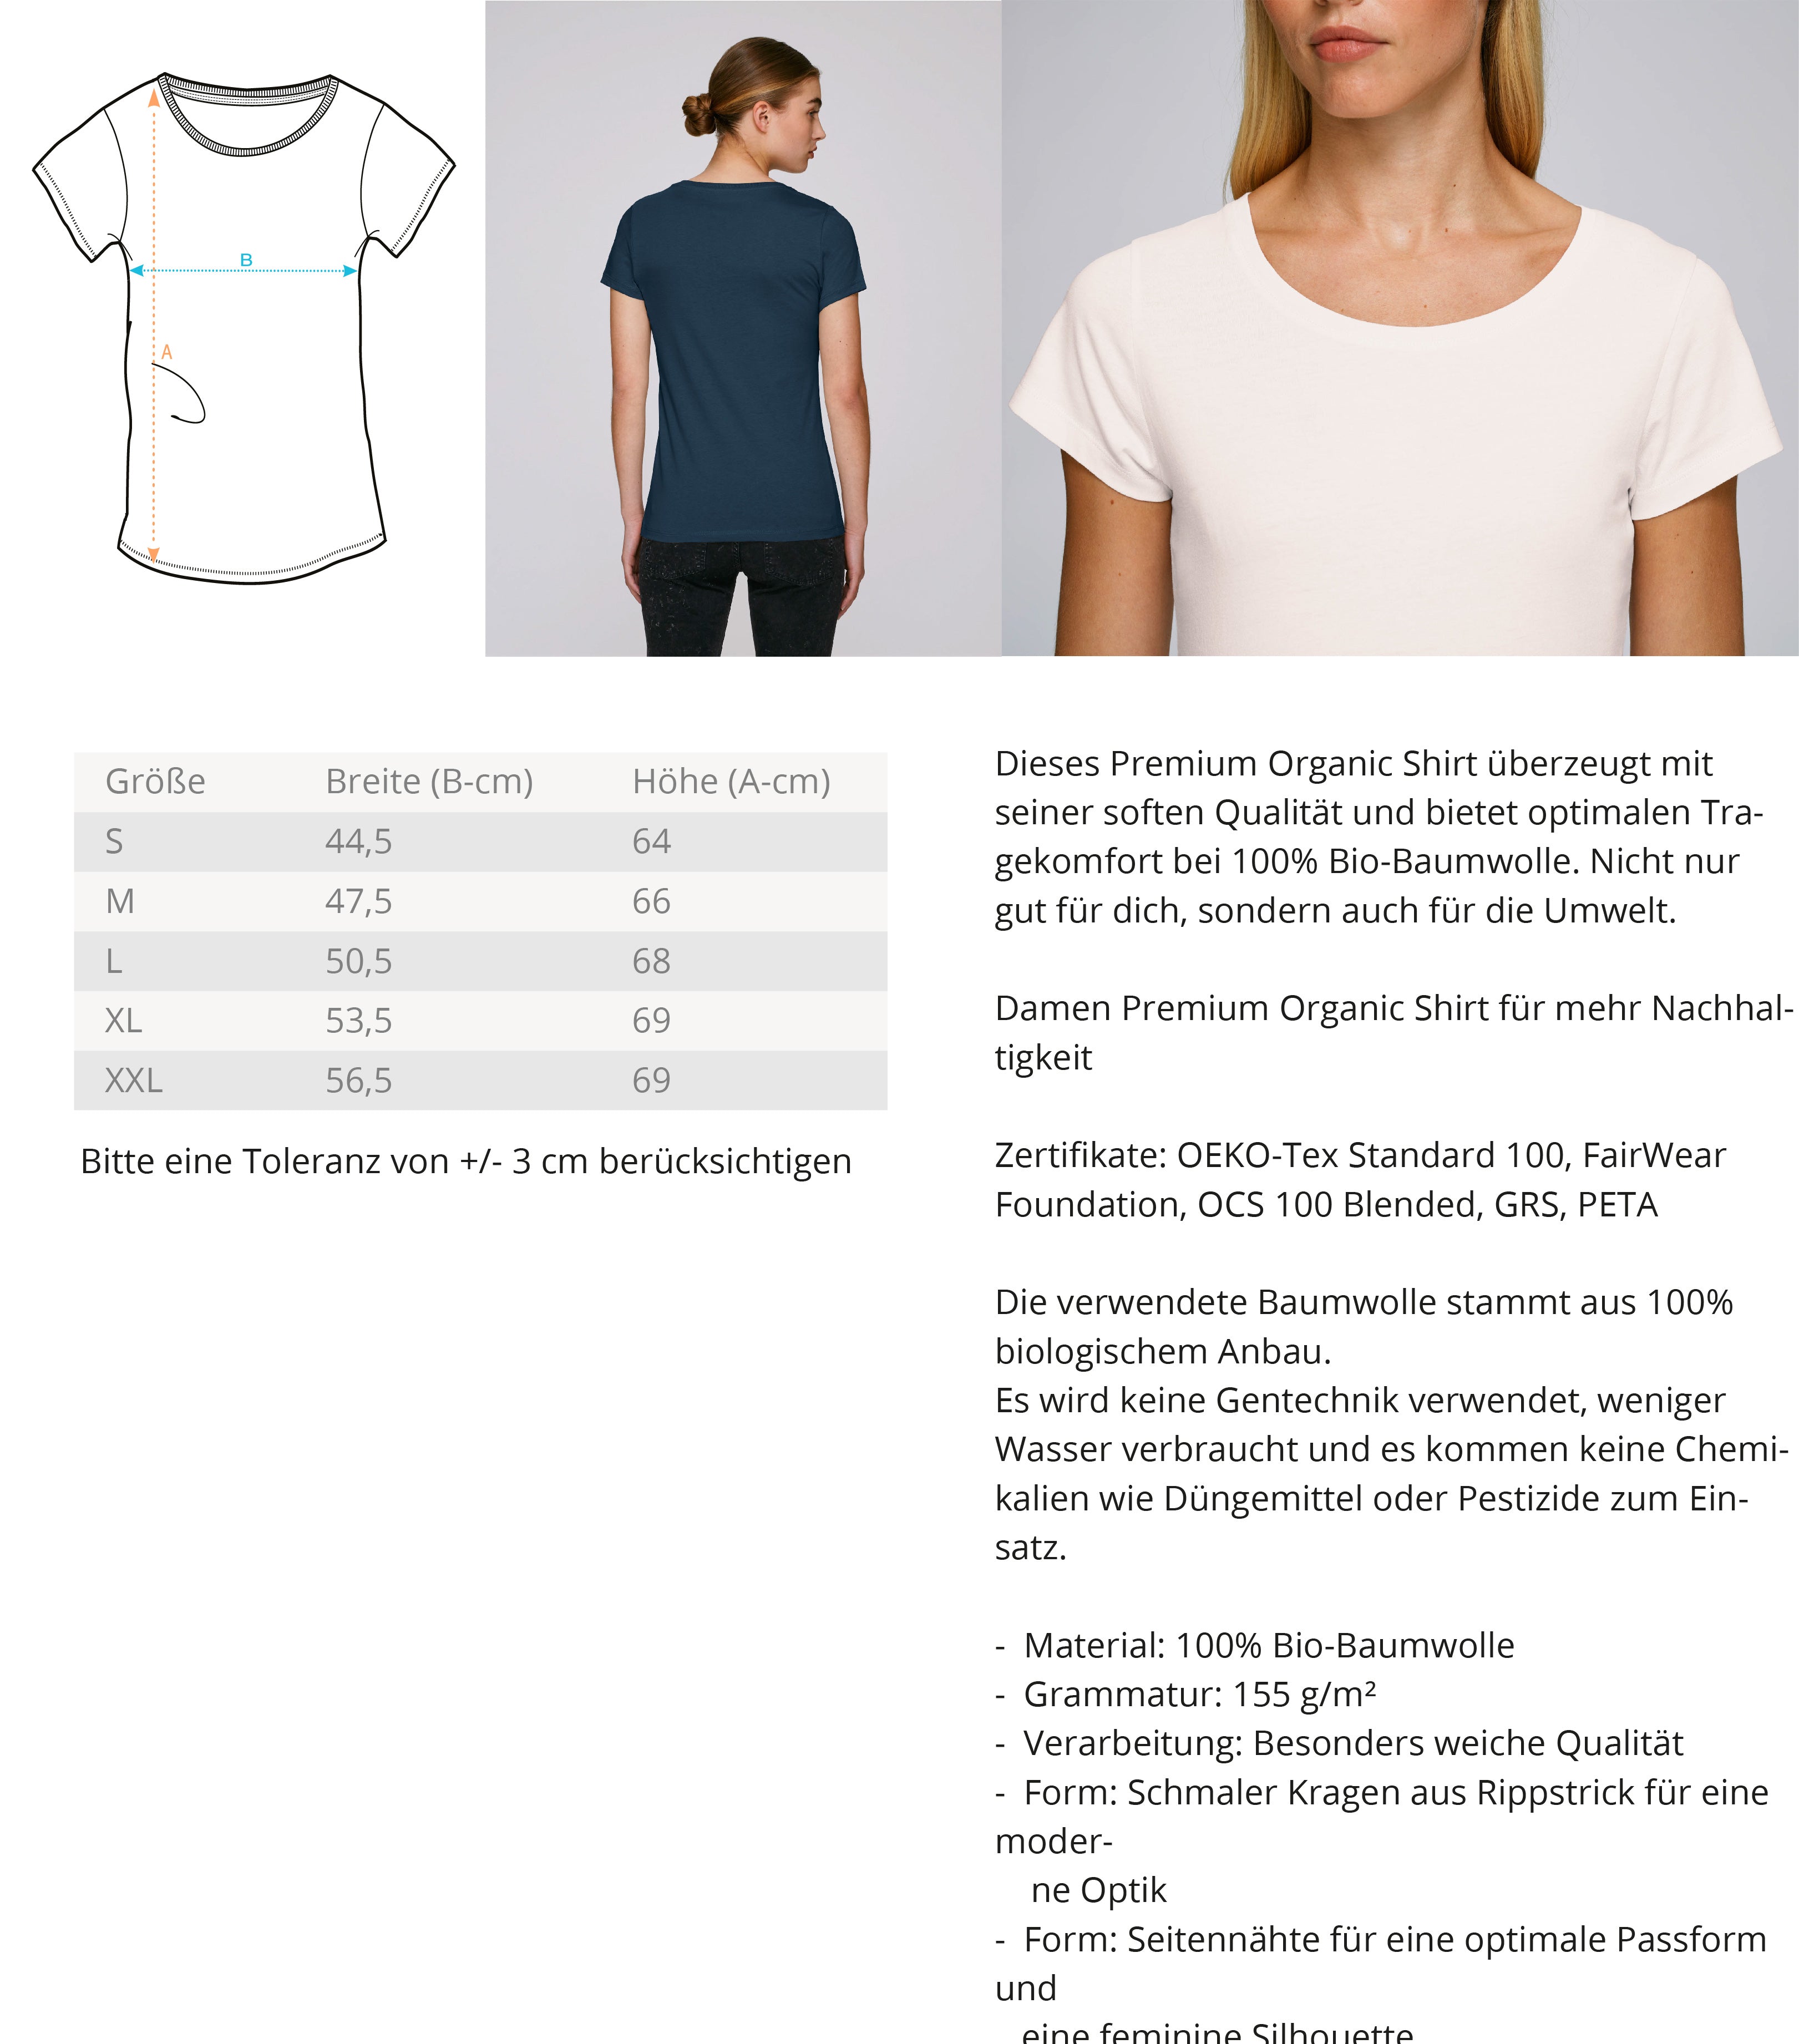 Spitze des Eisbergs  - Damen Premium Organic Shirt